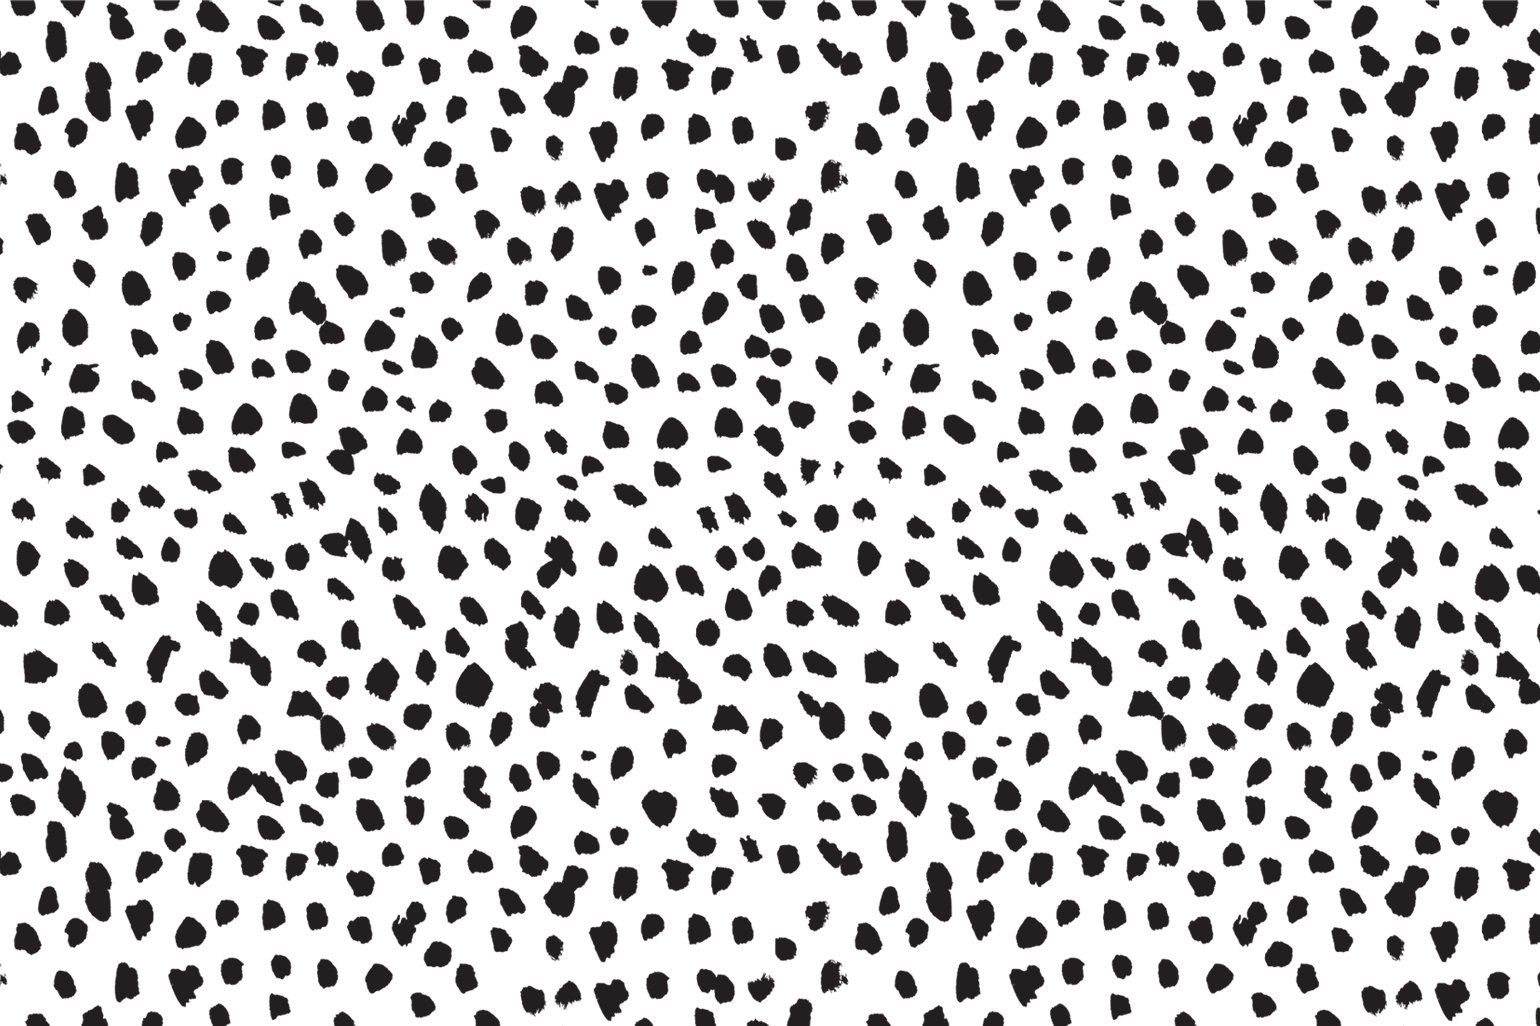 Black & White Dalmatian Print Wallpaper Mural. Hovia. Cheetah print wallpaper, Print wallpaper, Dalmatian